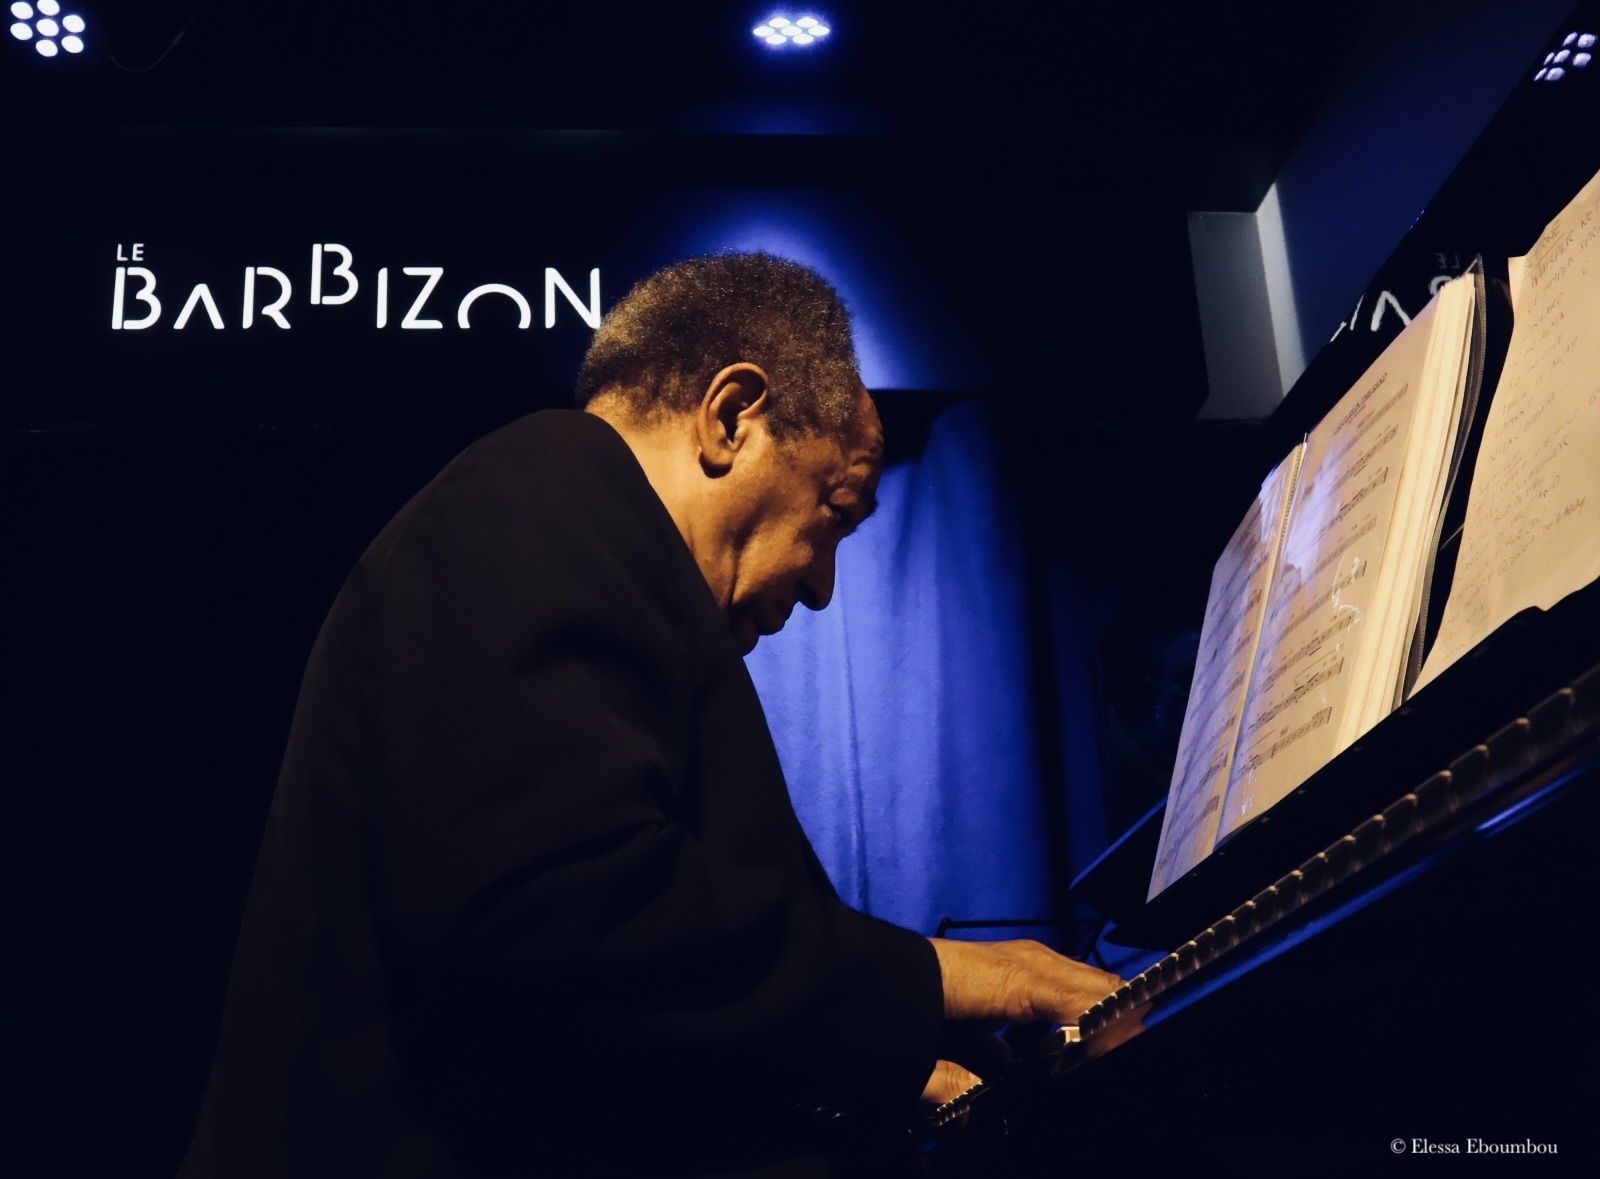 Alain Jean-Marie au piano au Barbizon